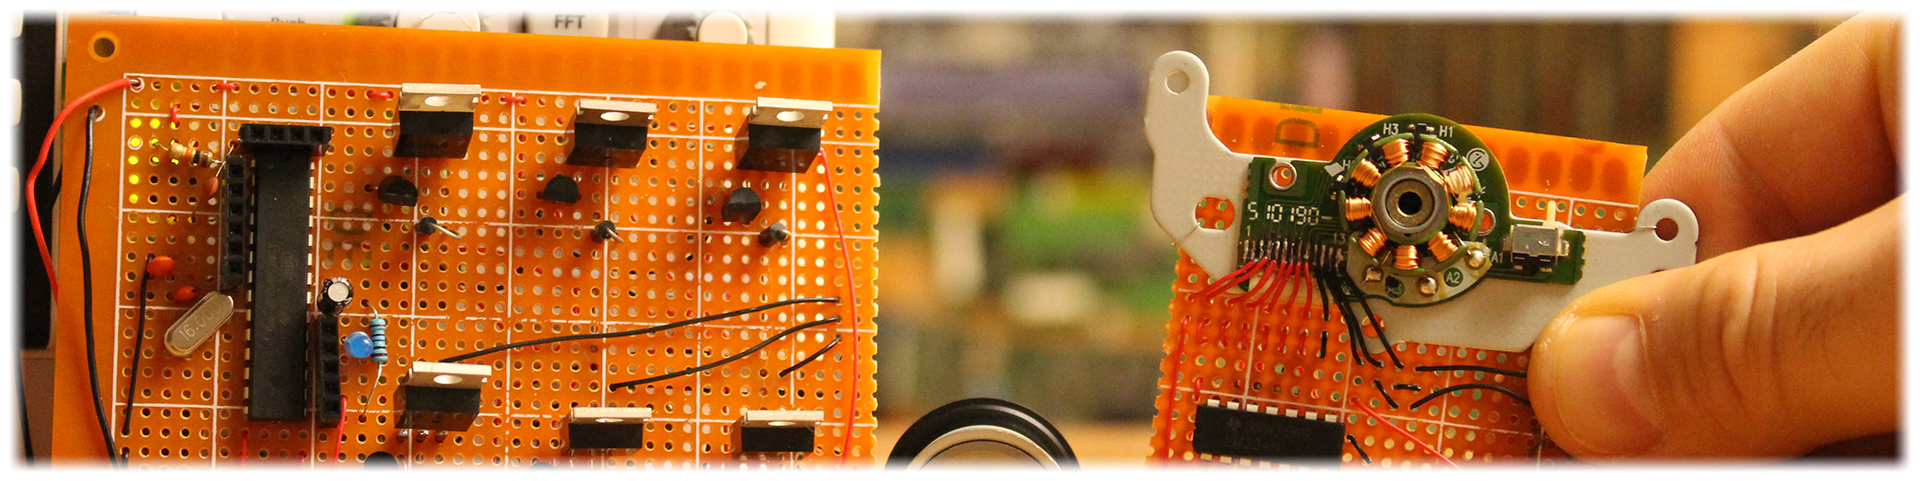 DIY sensored ESC circuit